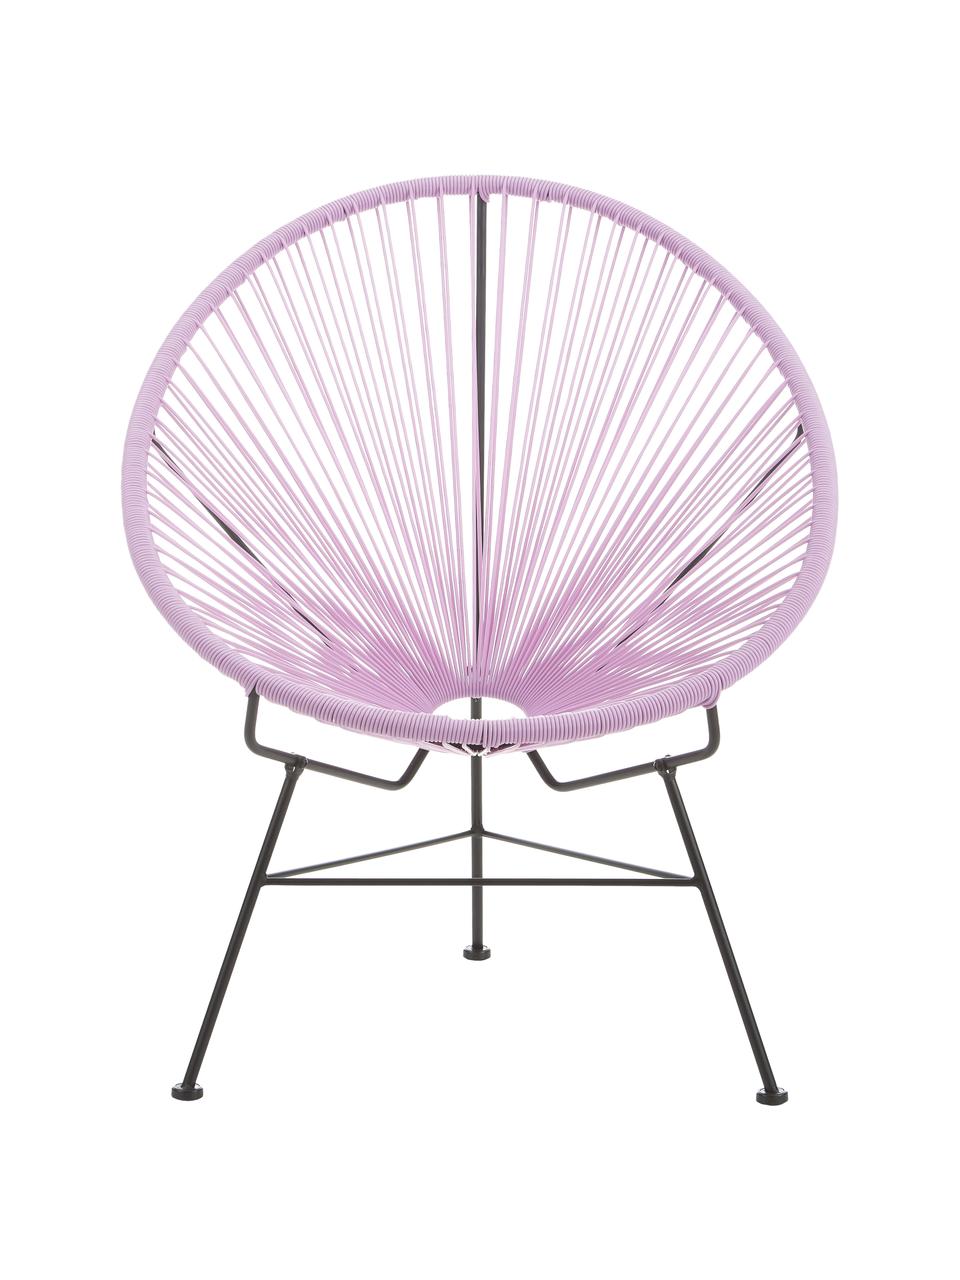 Loungesessel Bahia aus Kunststoff-Geflecht in Lavendel, Sitzfläche: Kunststoff, Gestell: Metall, pulverbeschichtet, Lila, B 81 x T 73 cm